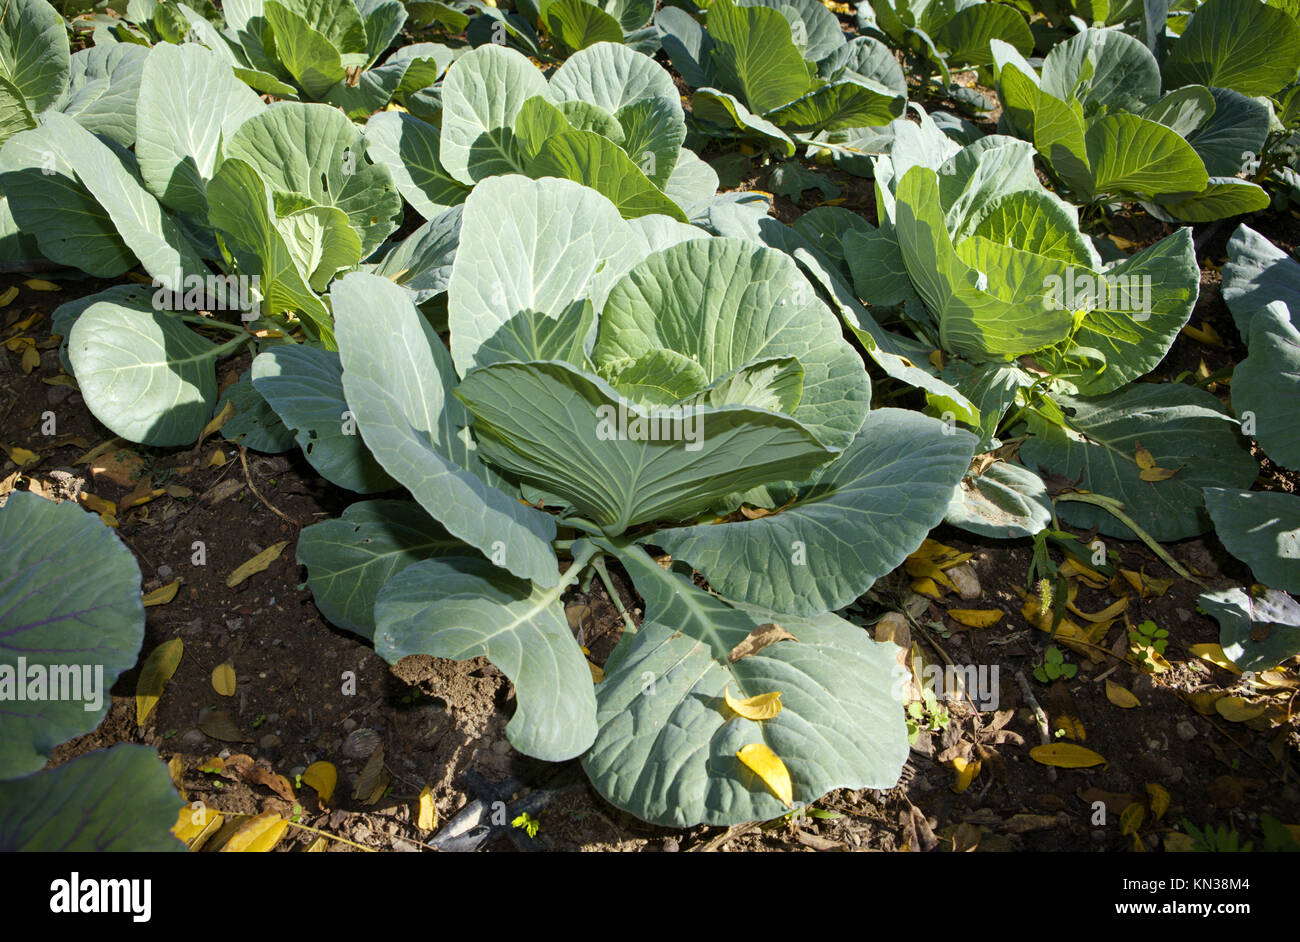 Green cabbage or Brassica oleracea, on vegetable garden bed. Stock Photo